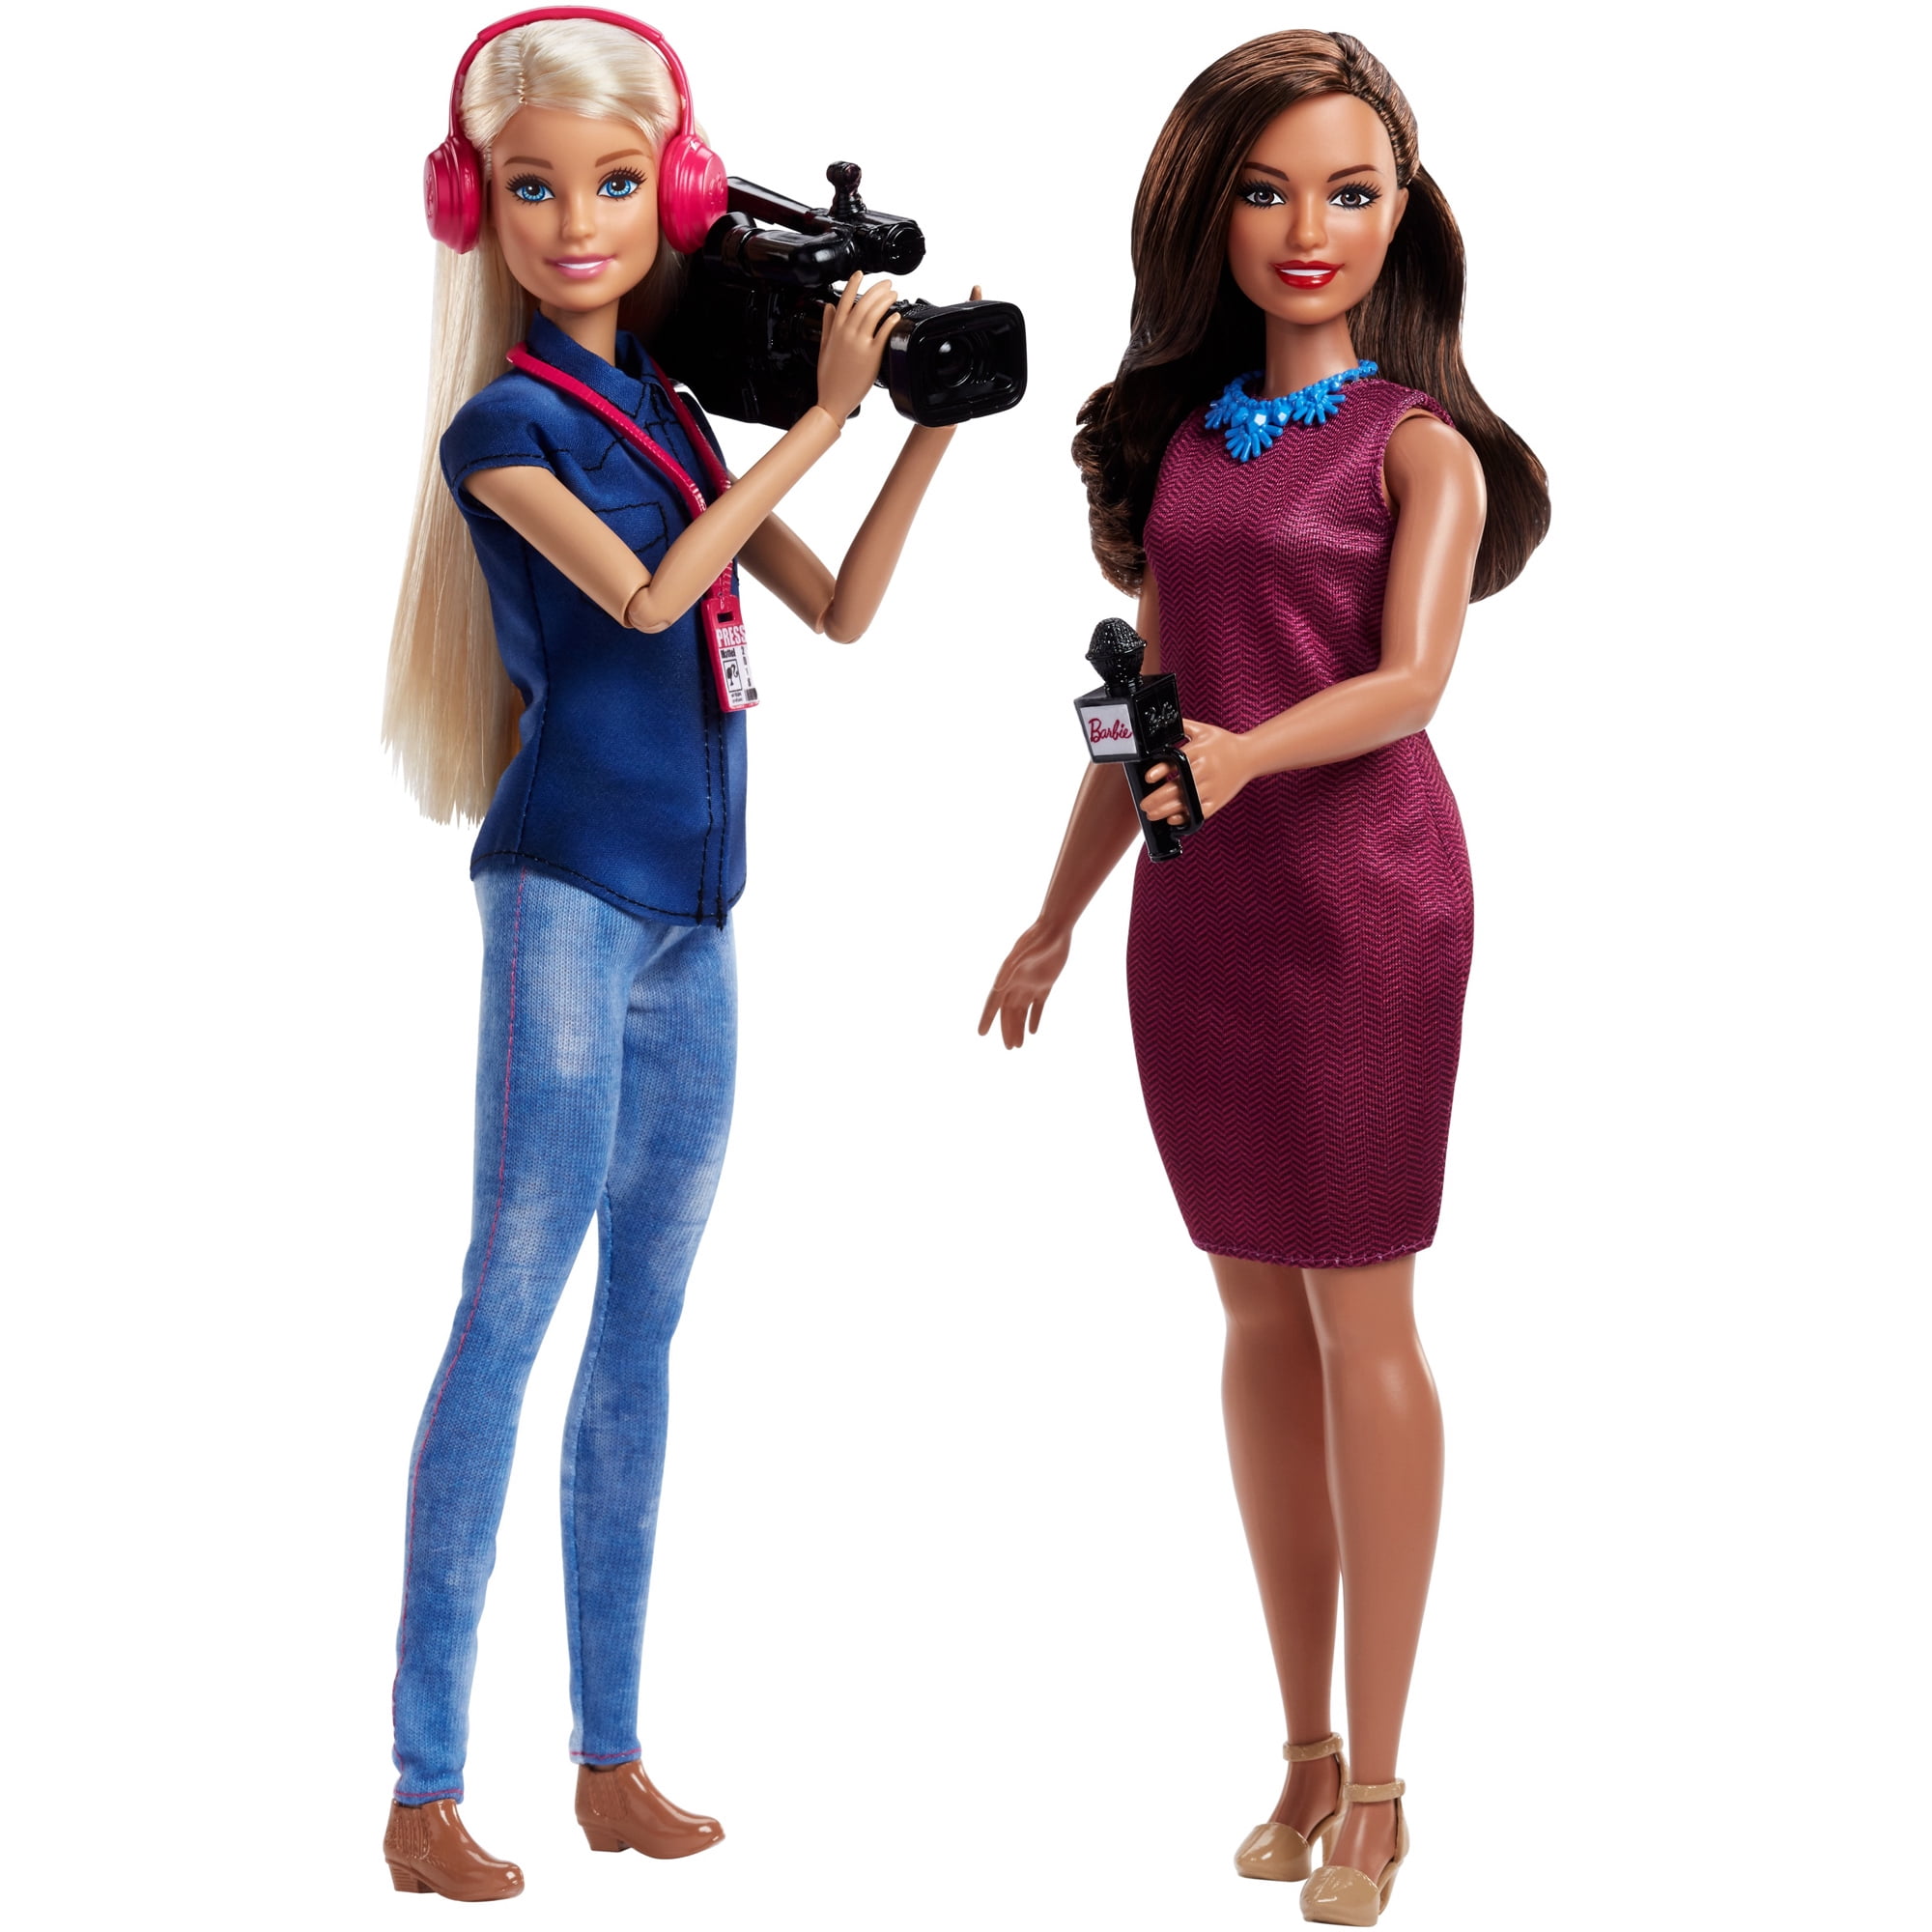 Куклу барби другую. Набор кукол Barbie команда теленовостей, fjb22. Кукла Барби оператор. Кукла Барби журналист.